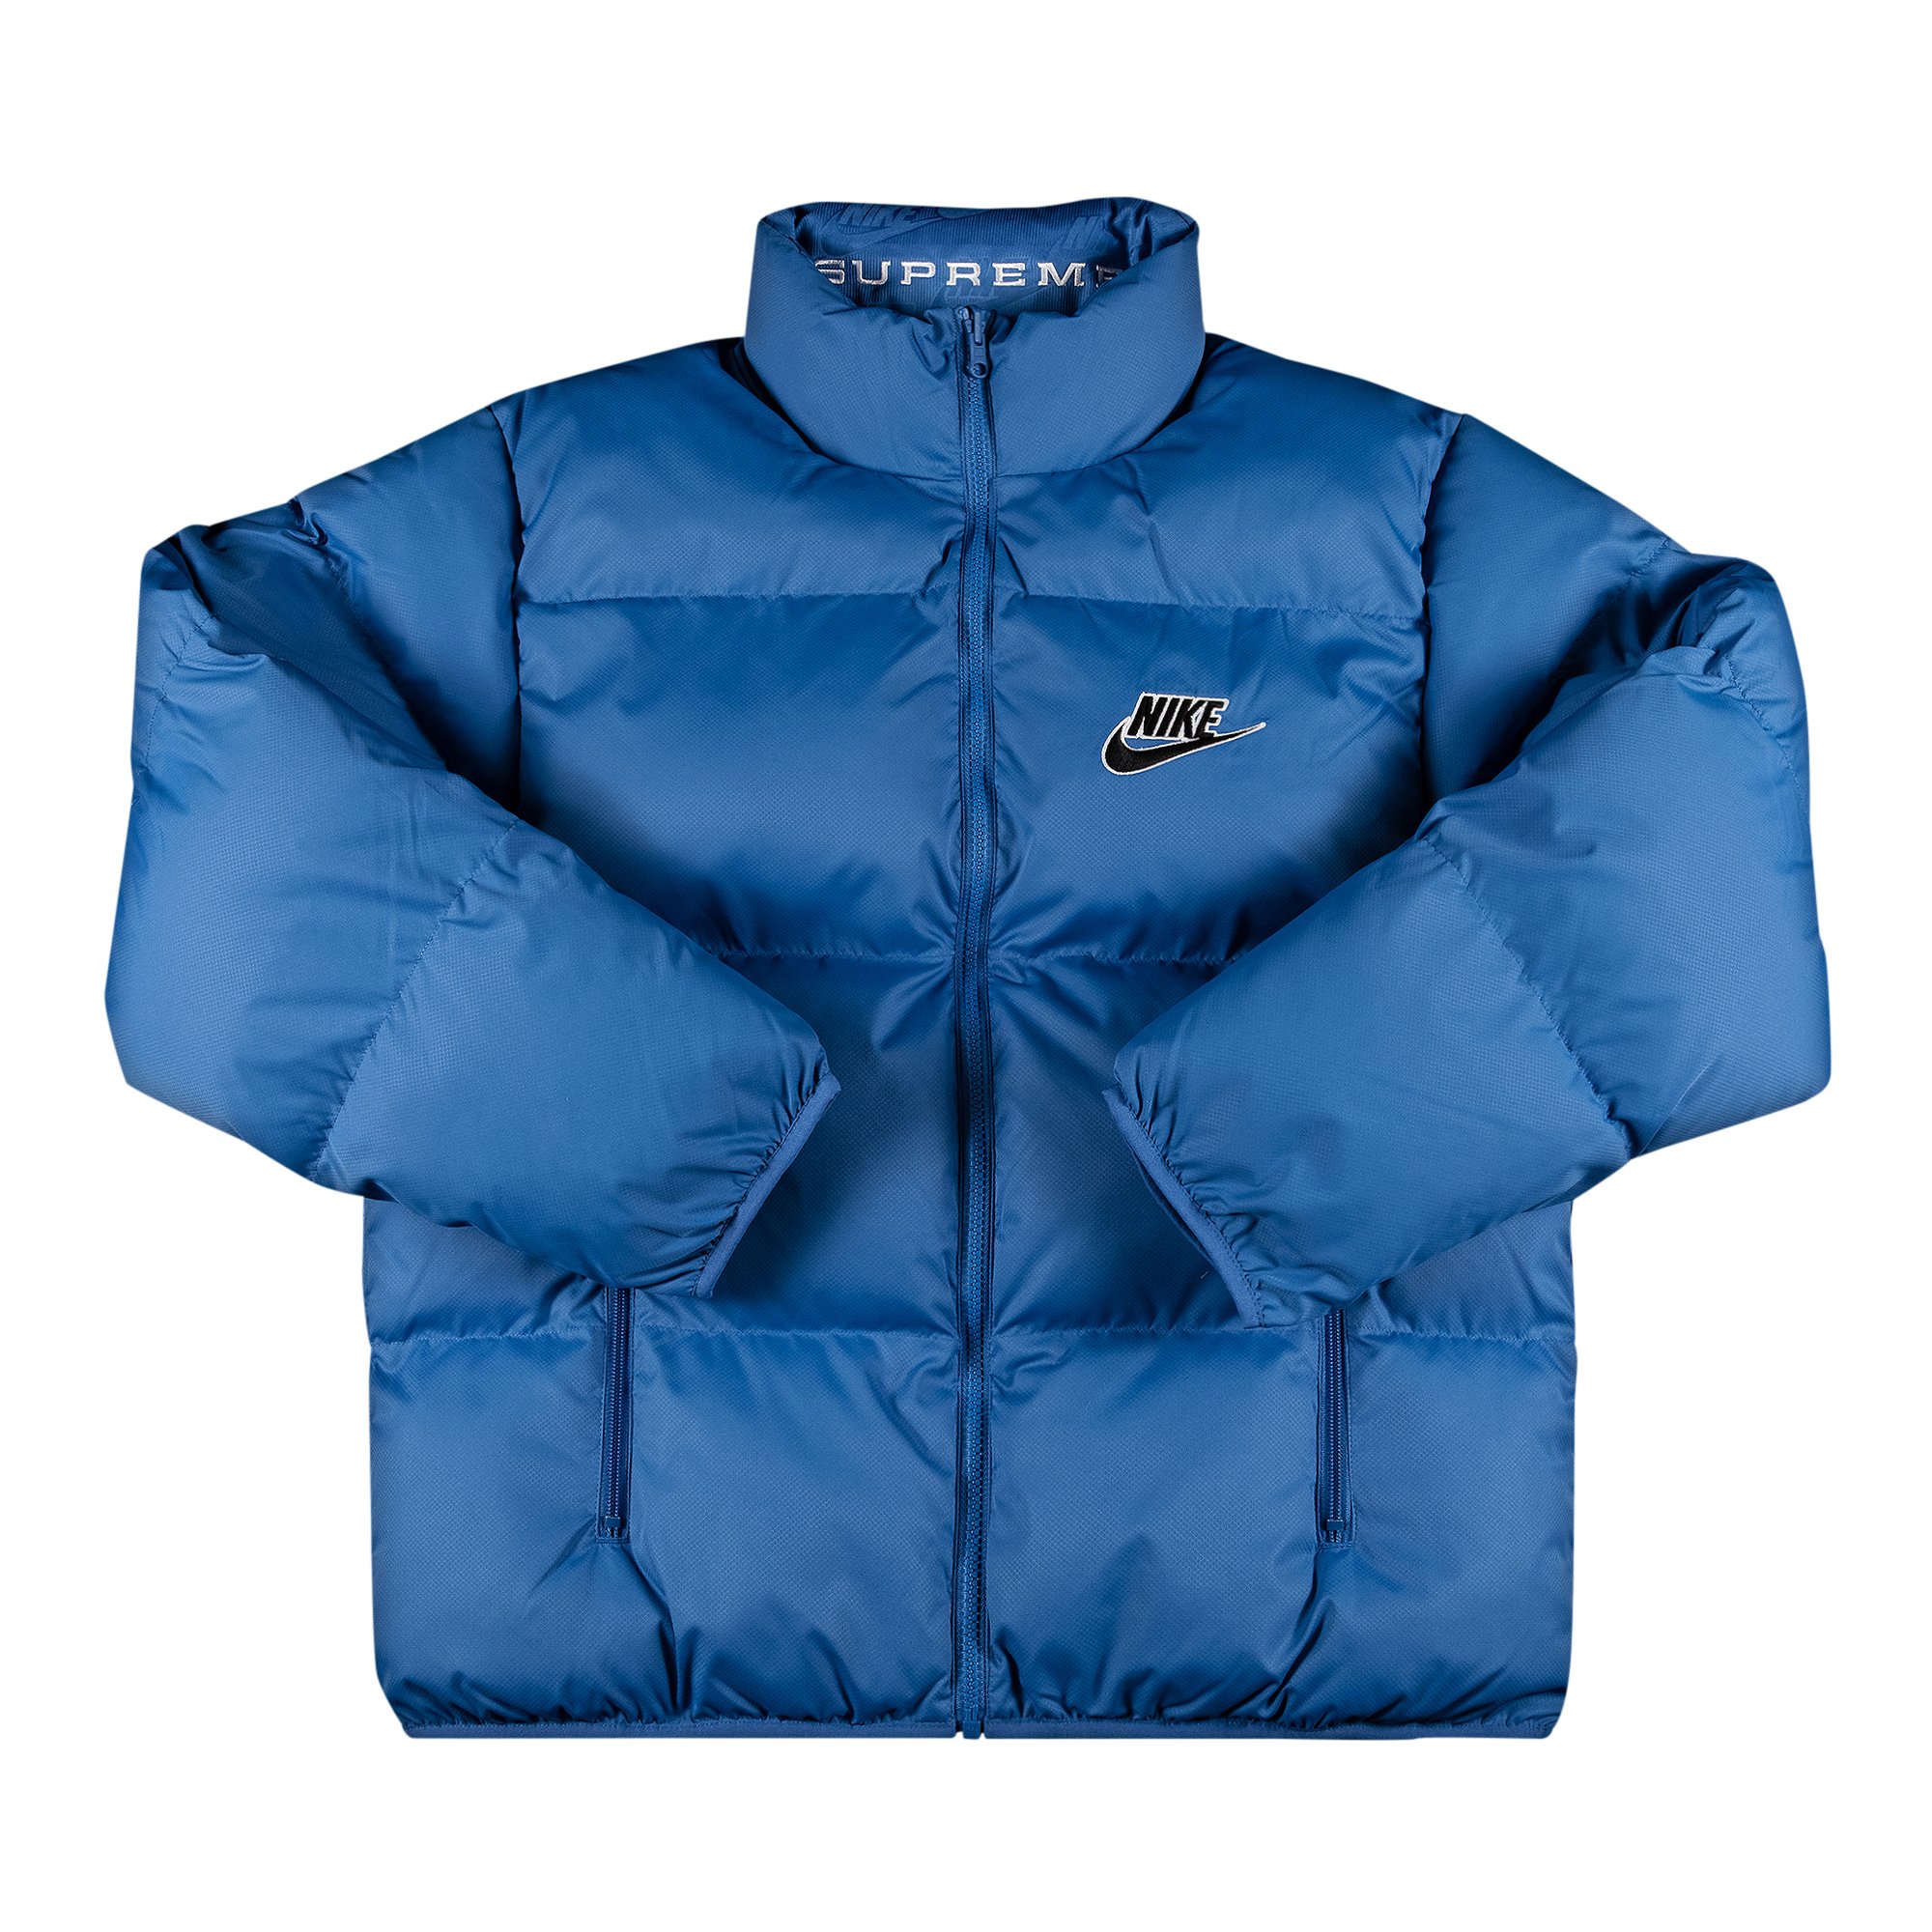 Supreme x Nike Reversible Puffy Jacket 'Blue'